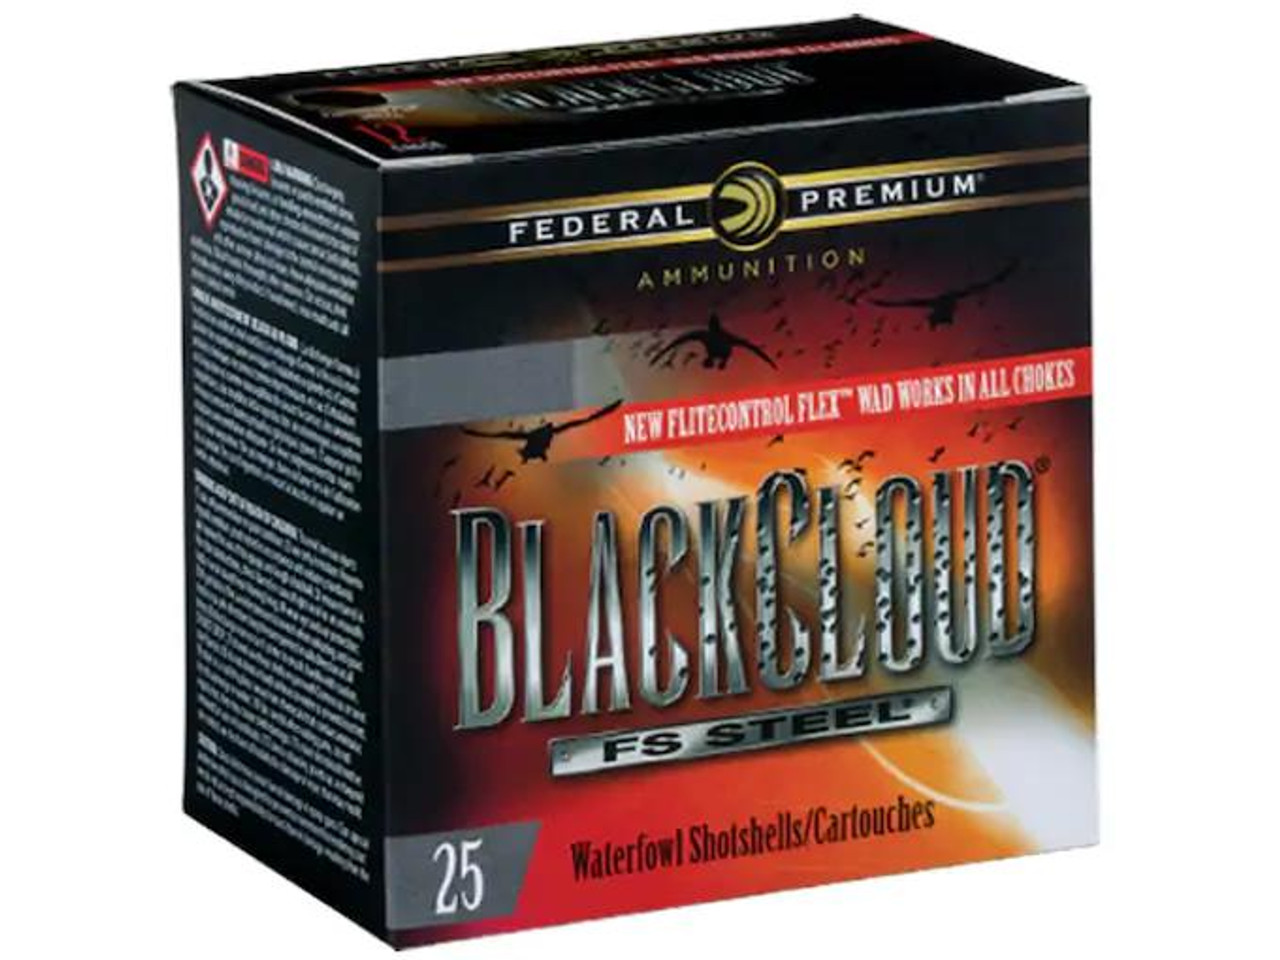 Federal Premium Black Cloud Ammunition 20 Gauge 3" 1 oz Non-Toxic FlightStopper Steel Shot #PWBX209 4